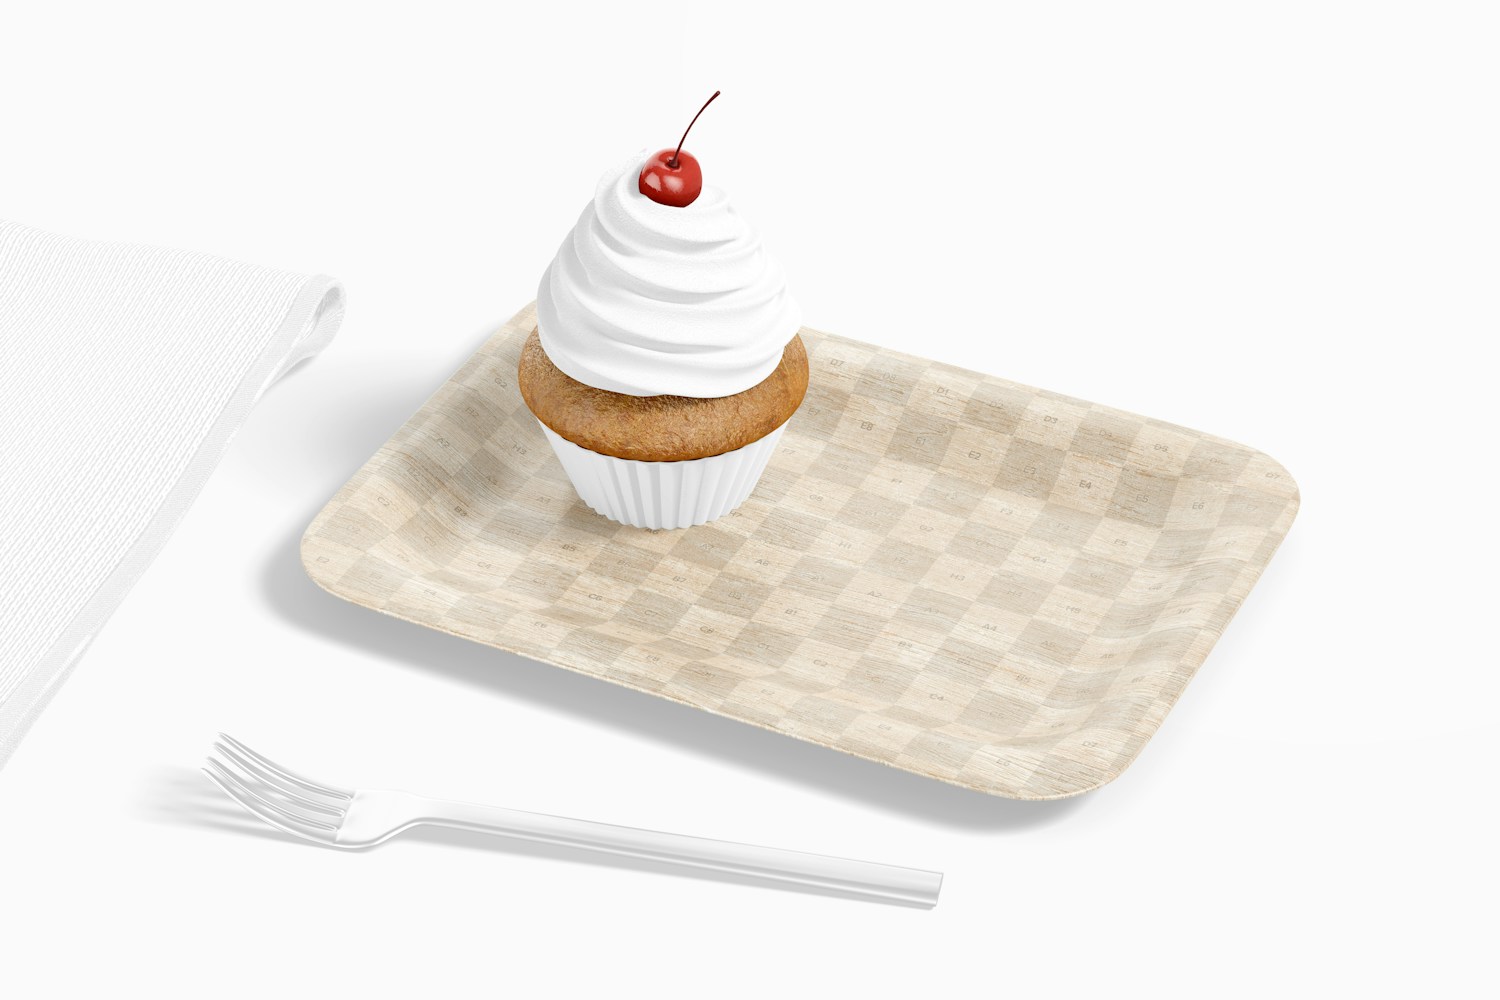 Rectangular Dessert Plate with Cupcake Mockup